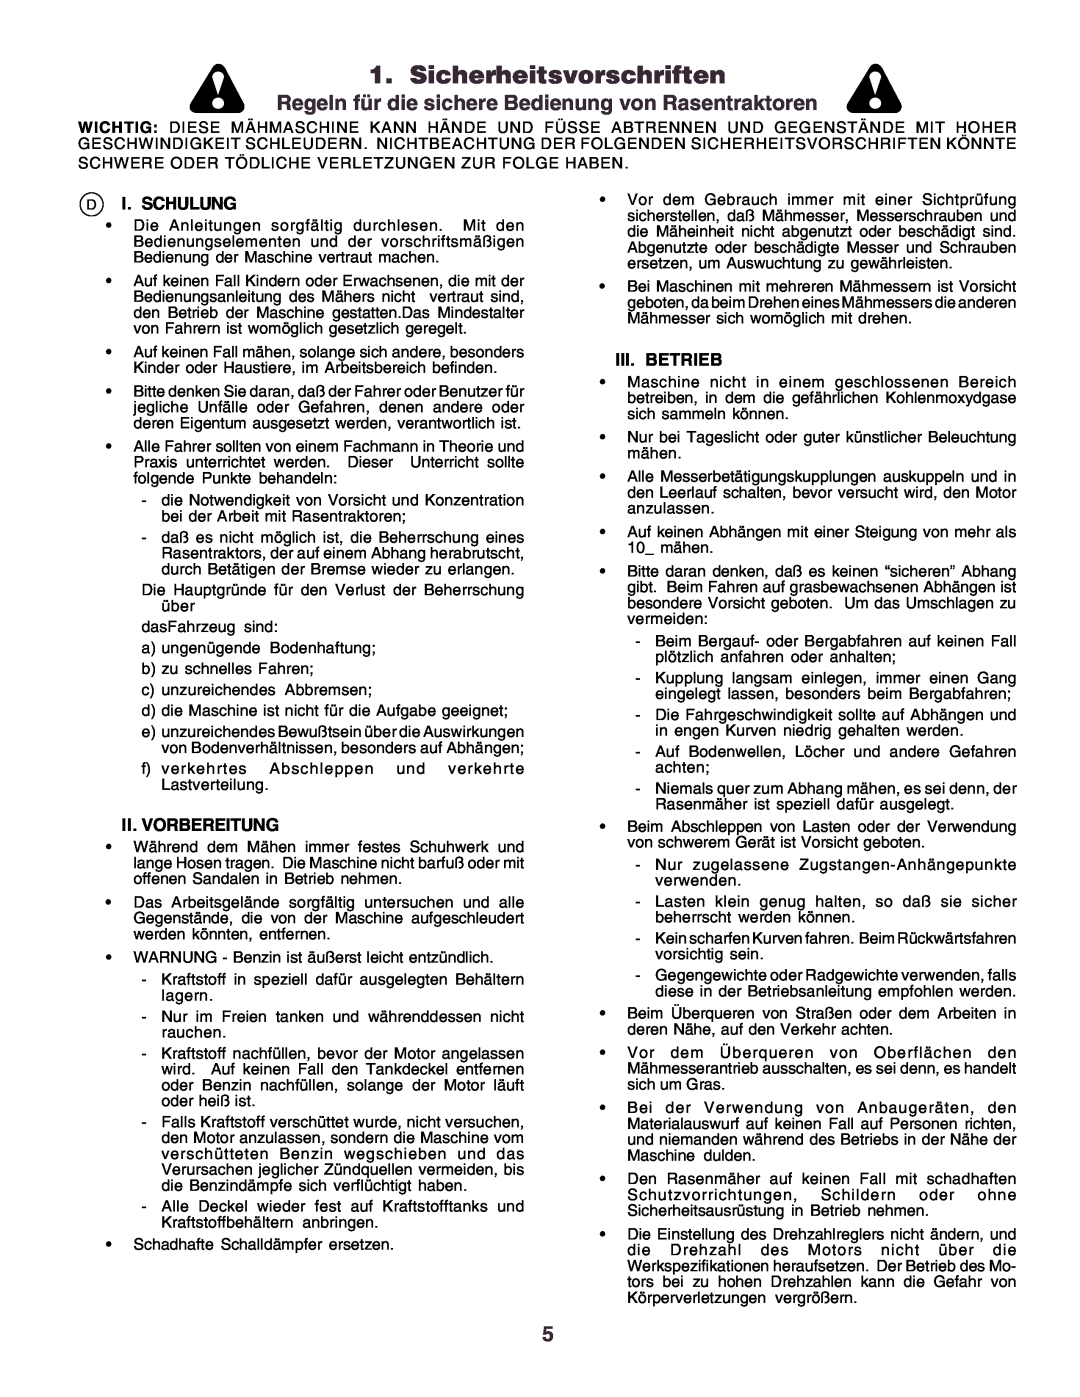 Husqvarna CT160 instruction manual Sicherheitsvorschriften, Di. Schulung, Ii.Vorbereitung, Iii.Betrieb 